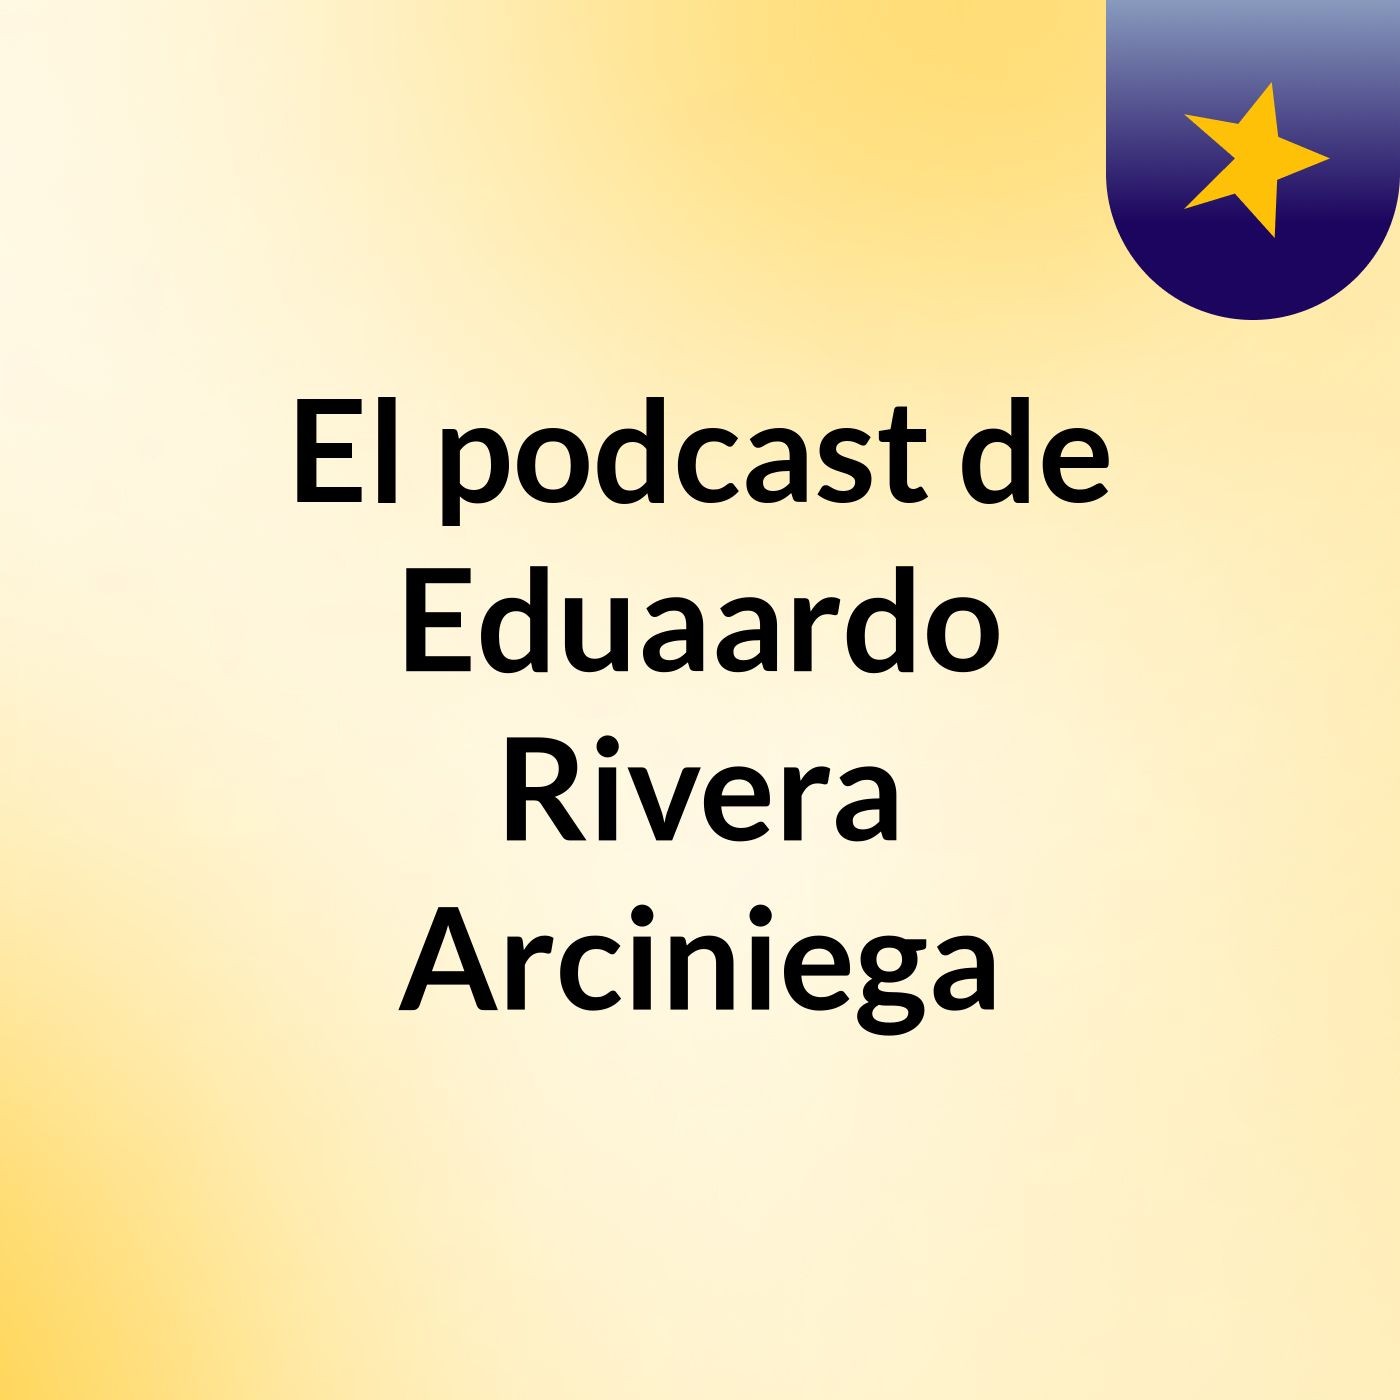 El podcast de Eduaardo Rivera Arciniega